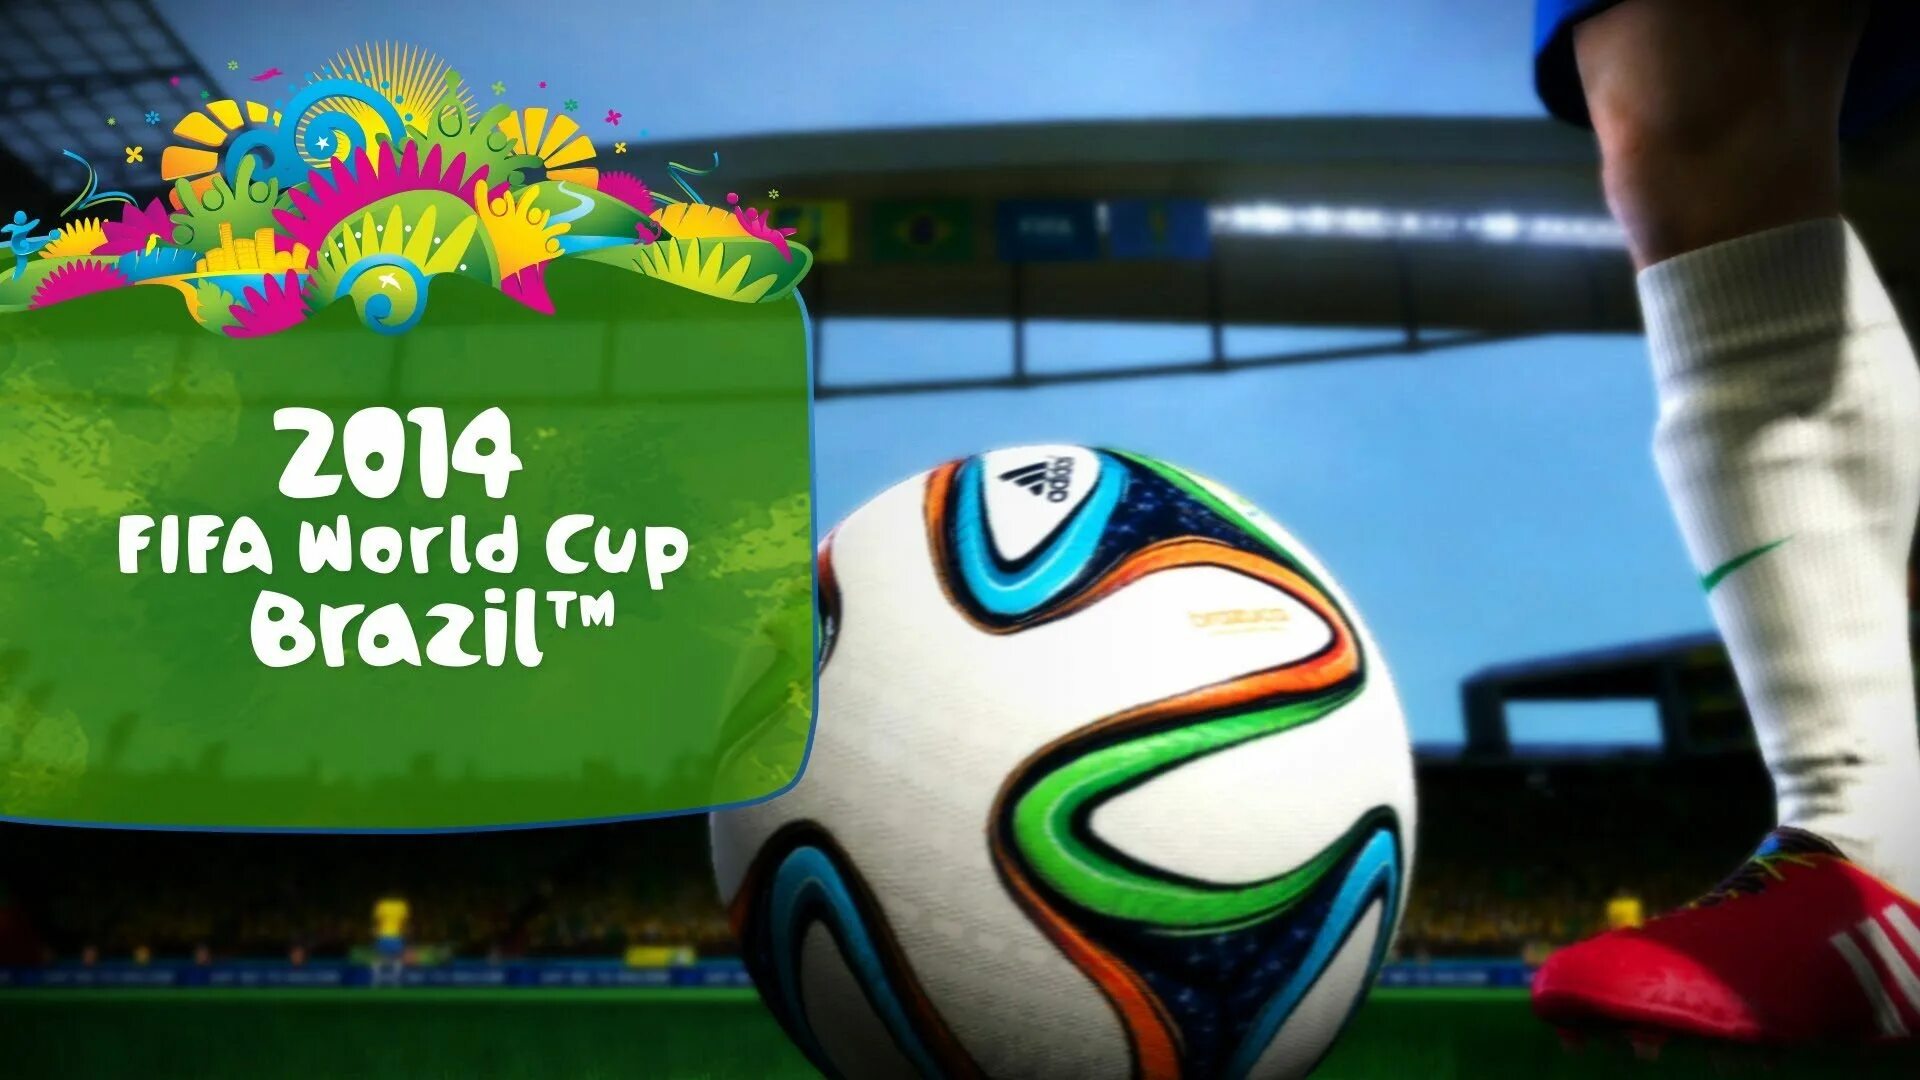 Fifa brazil. 2014 FIFA World Cup Brazil для Xbox 360. ФИФА 14 ворлд кап Бразилия. ФИФА 14 ворлд кап 2014 Бразилия. ЧМ 2014 В FIFA 14.